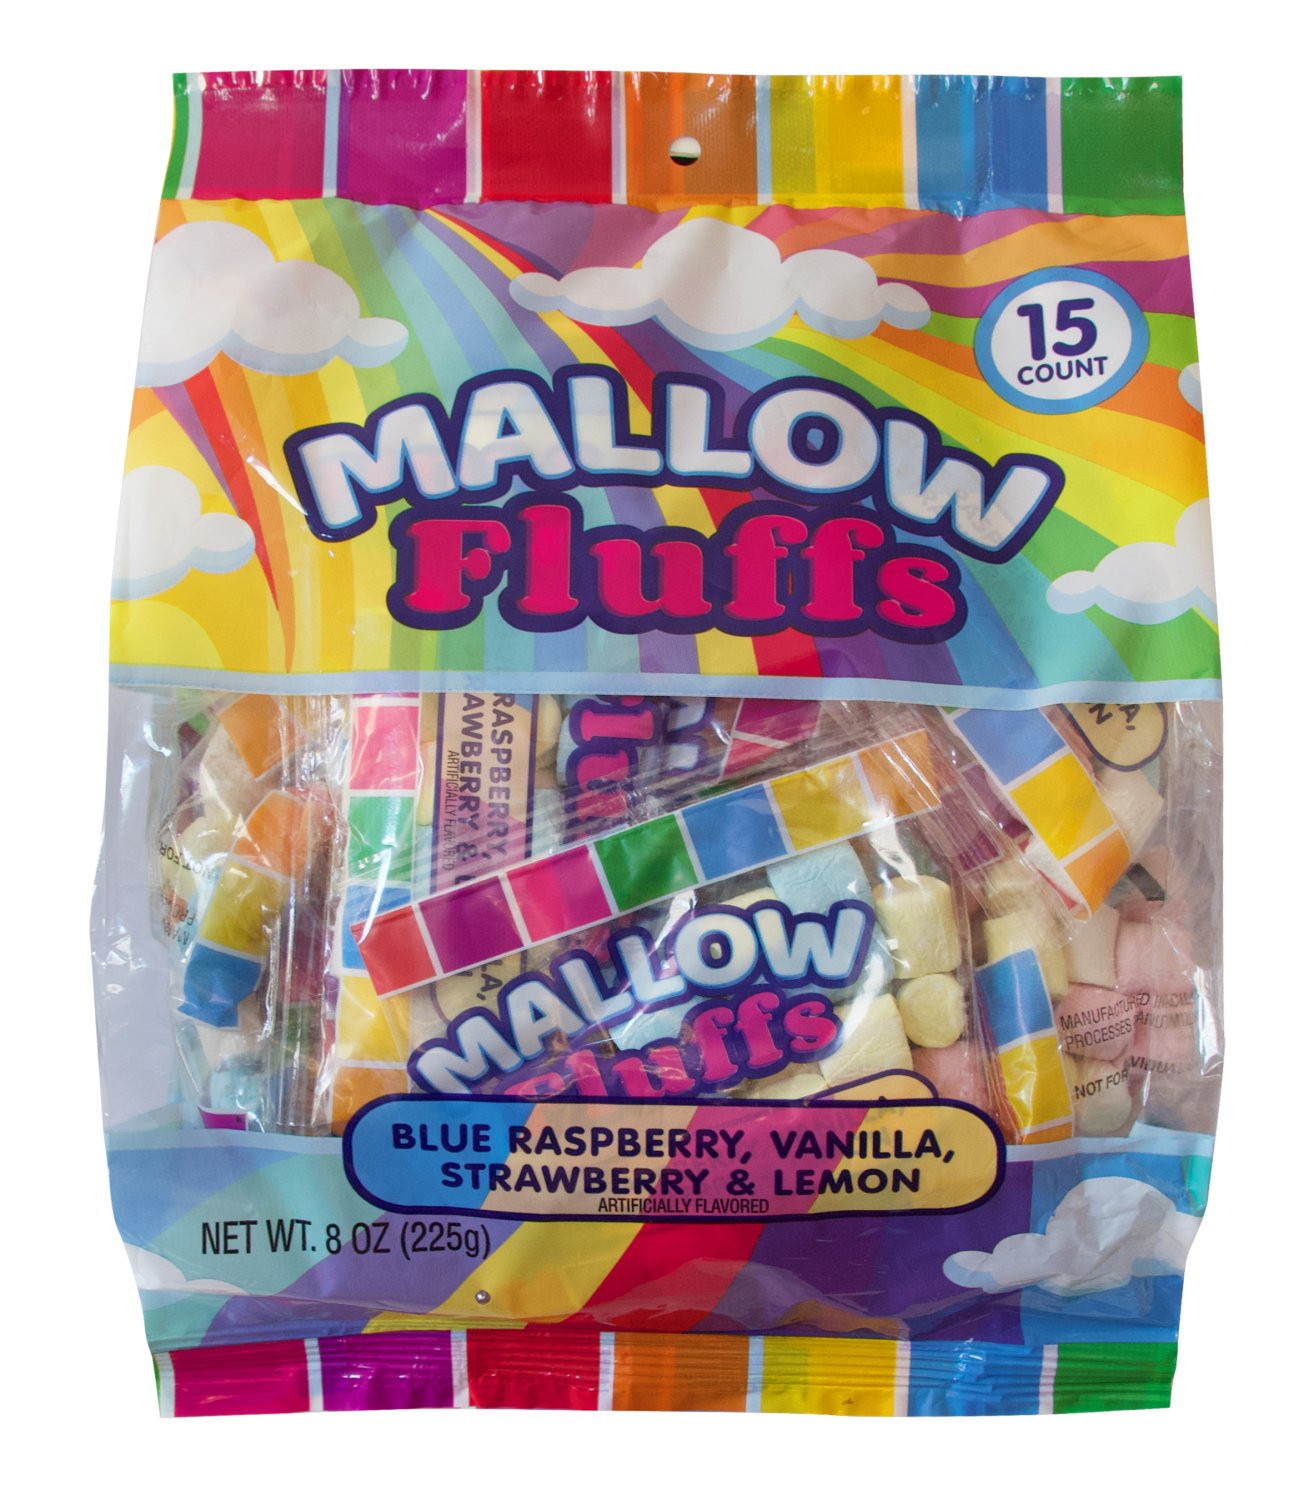 Hilco Rainbow Mallows 15ct. Gusset Bag